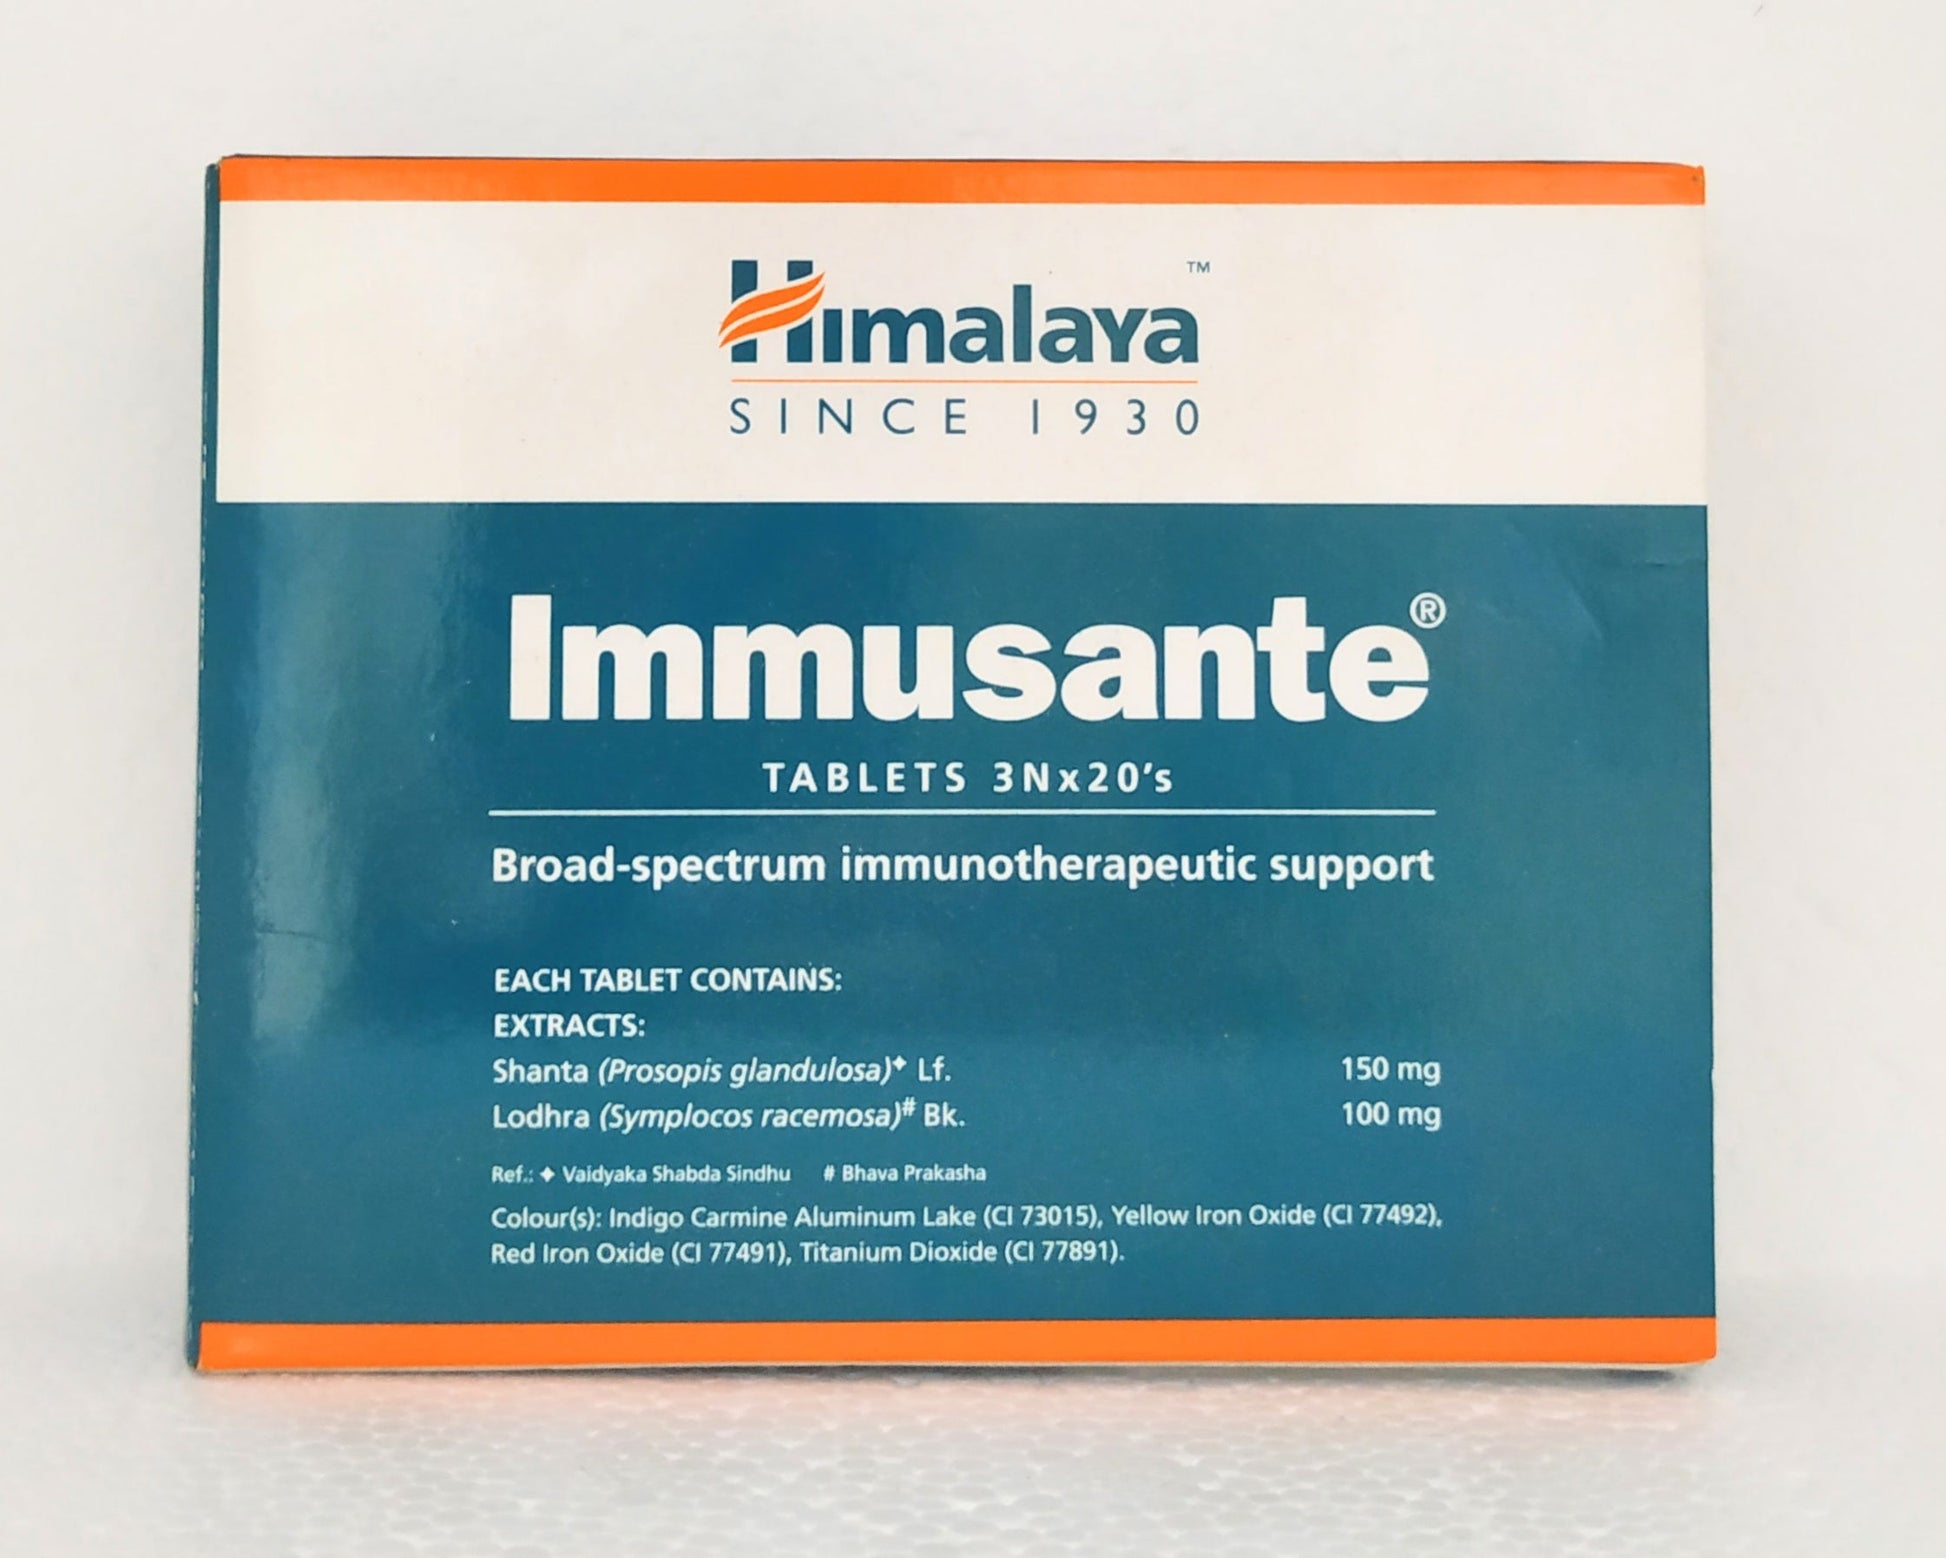 Immusante tablets - 20Tablets -  Himalaya - Medizzo.com